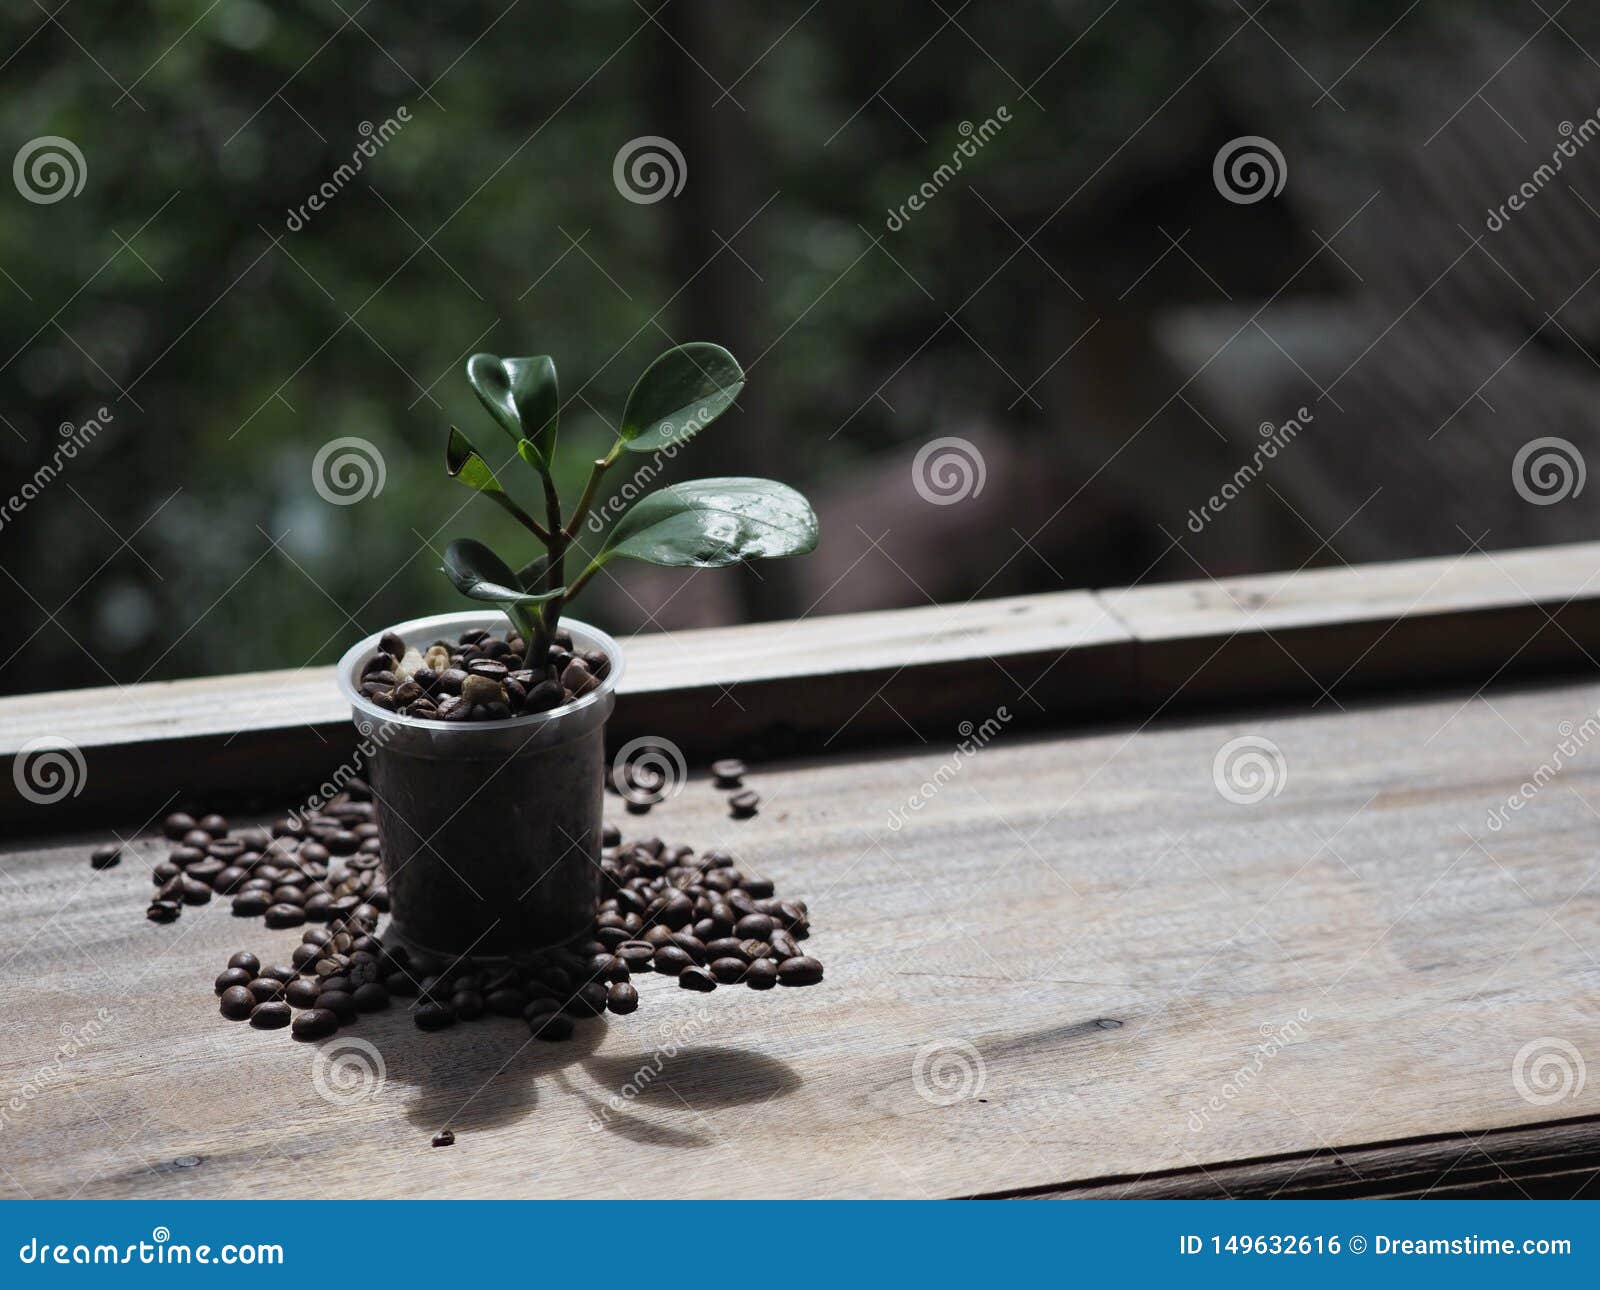 coffee tree in the pot